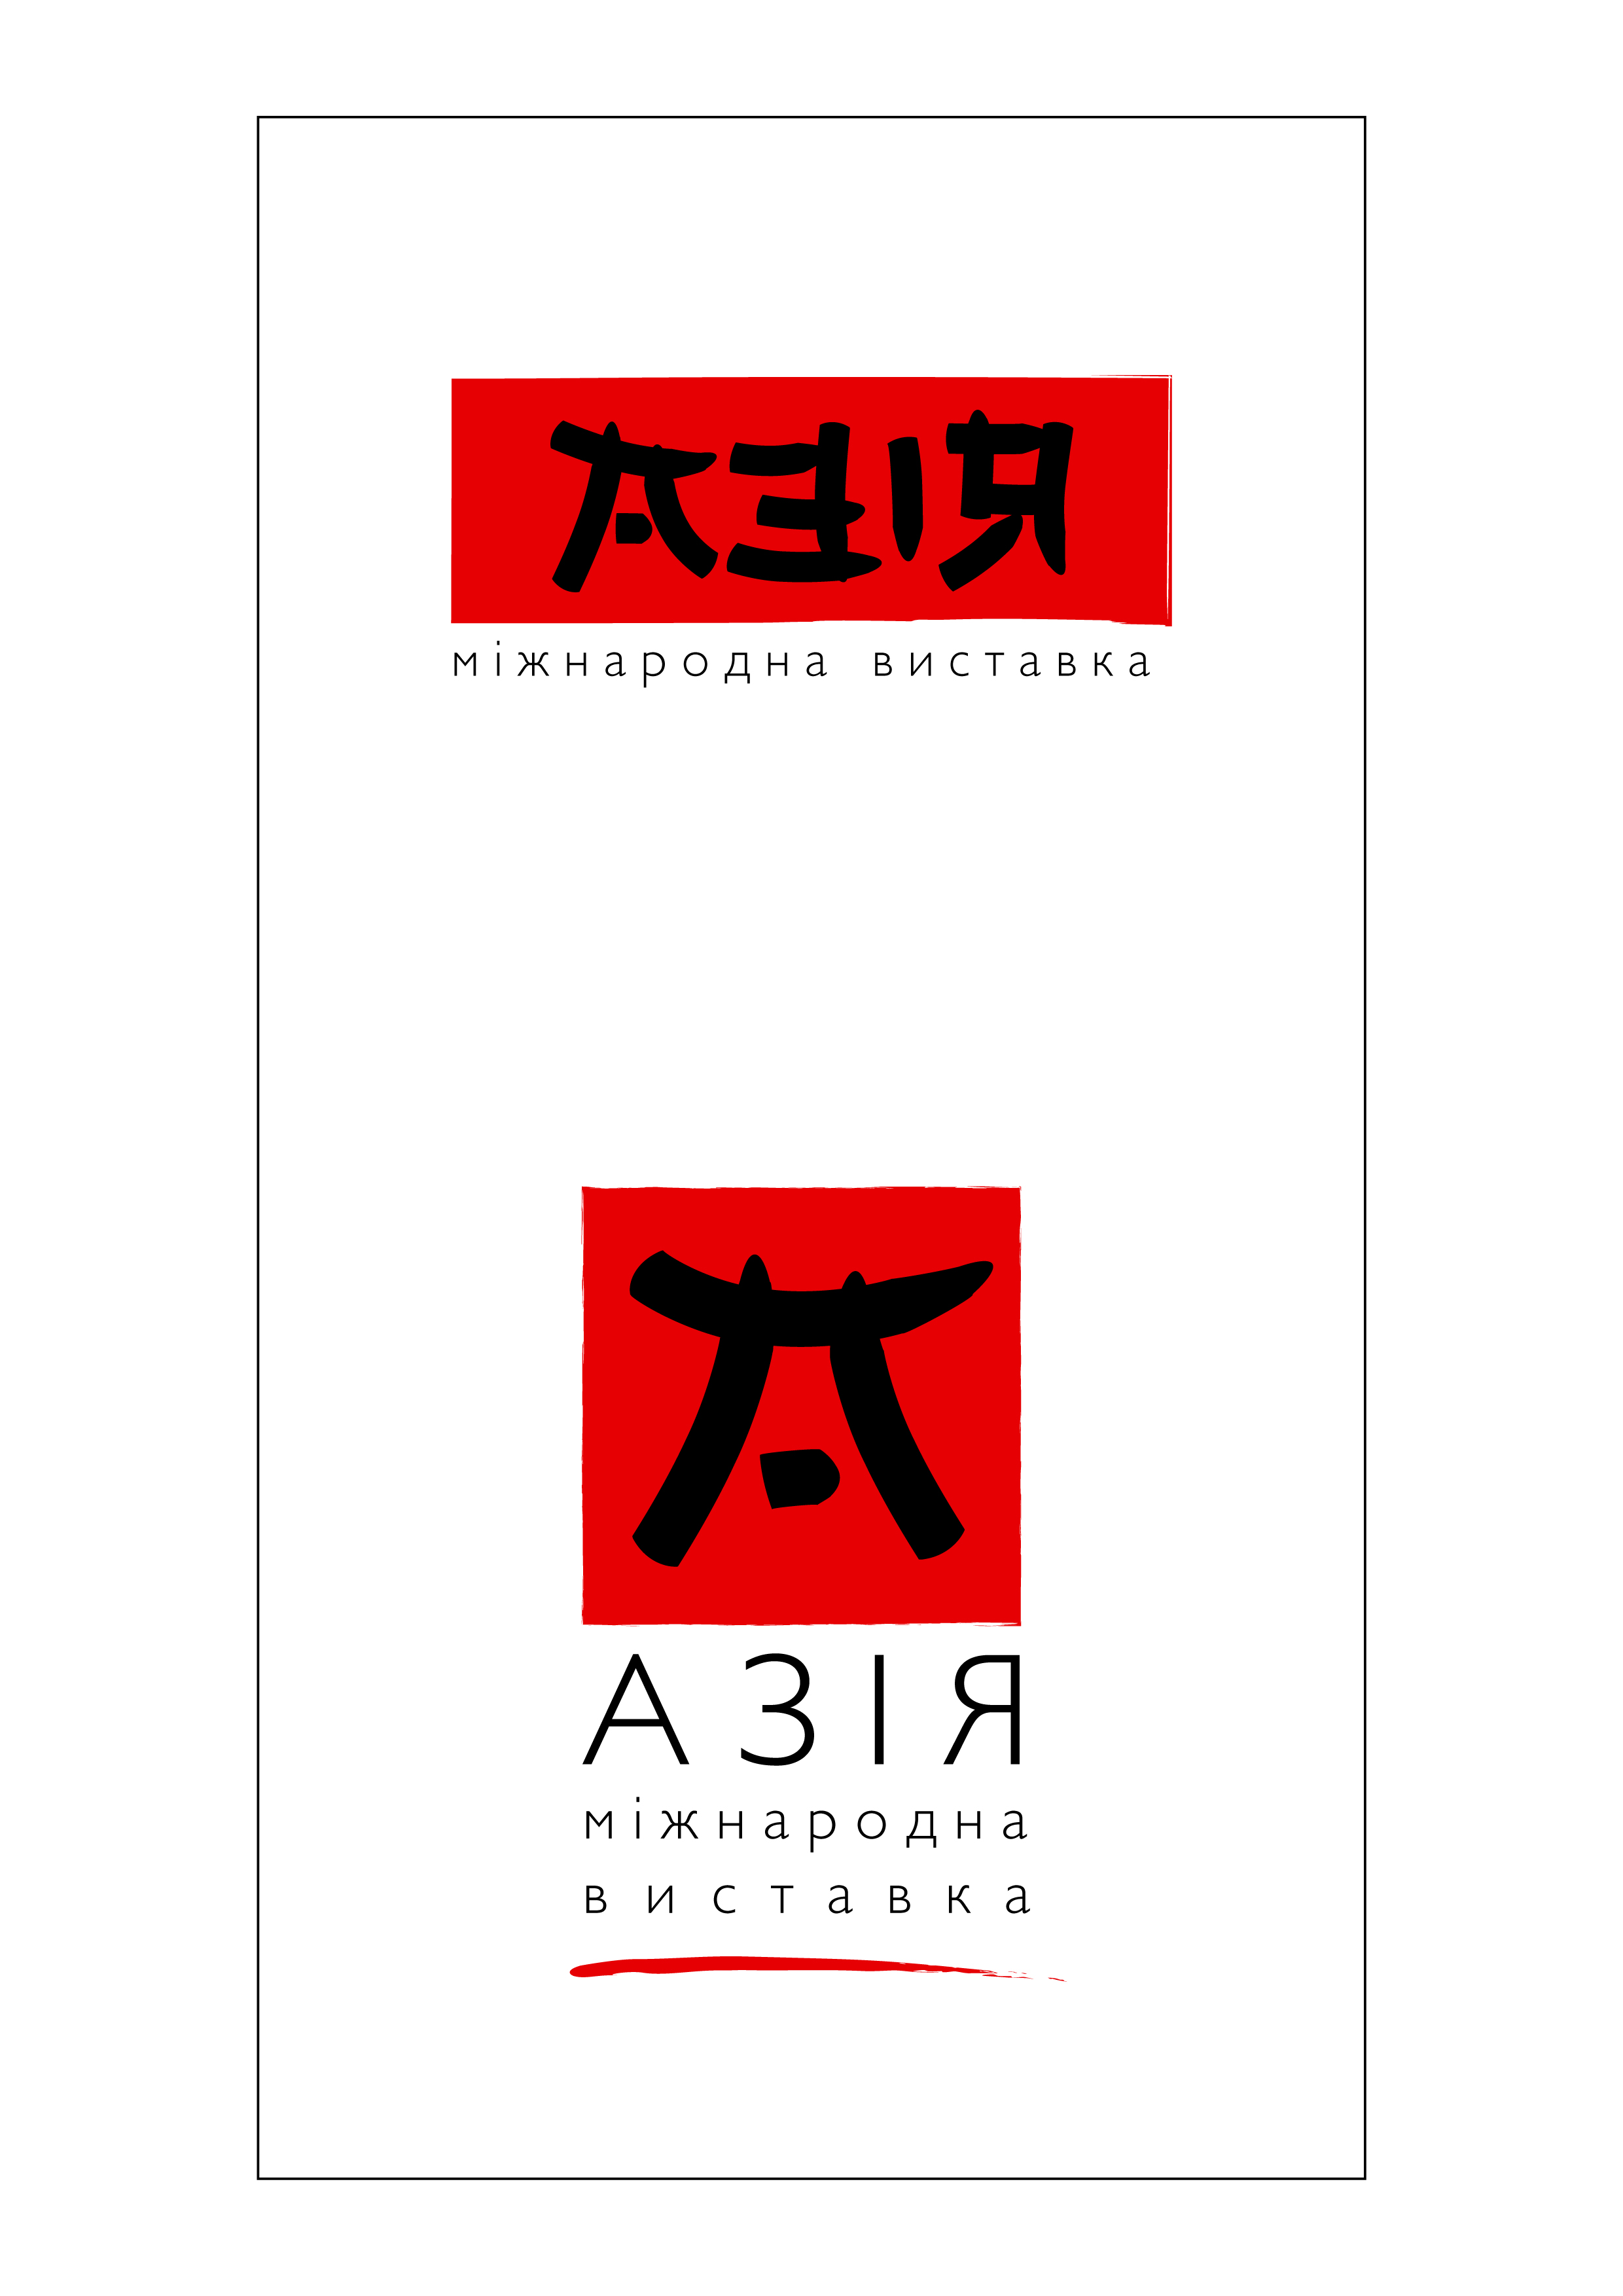 Эскиз лого